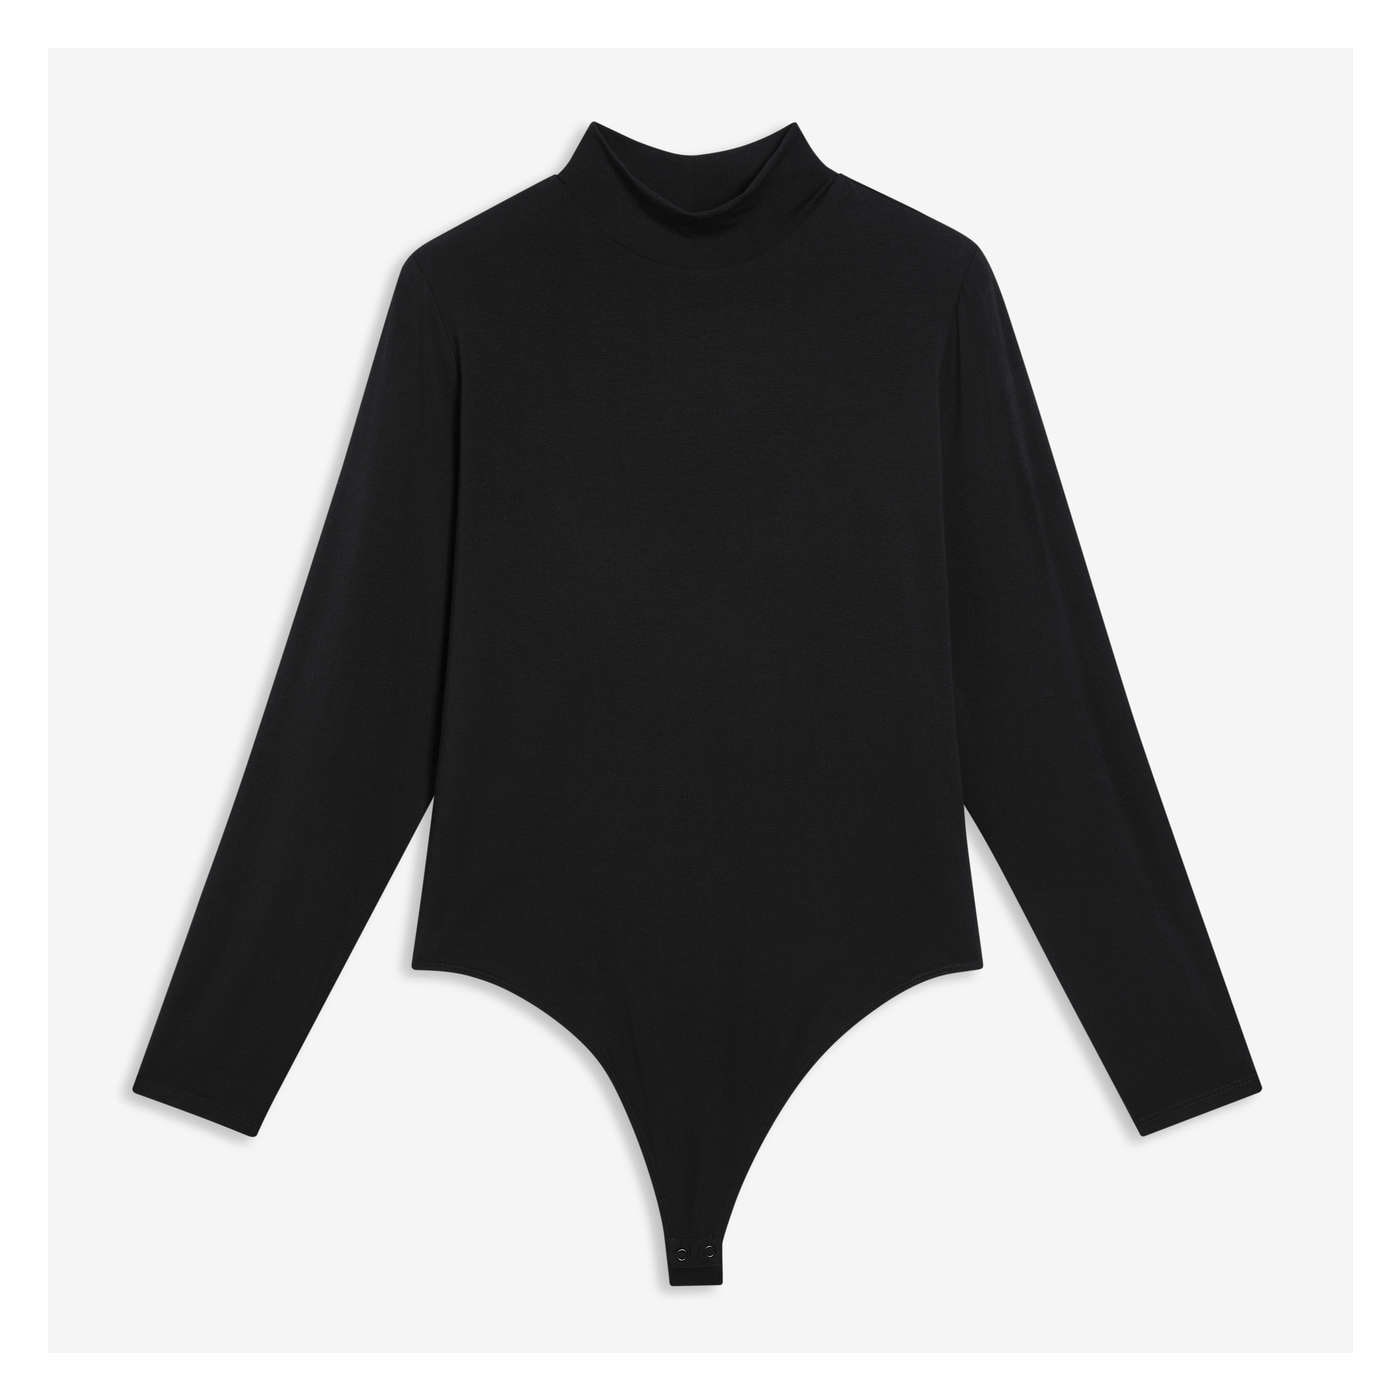 Brushed Black Long Sleeve Bodysuit - Black – BLVD